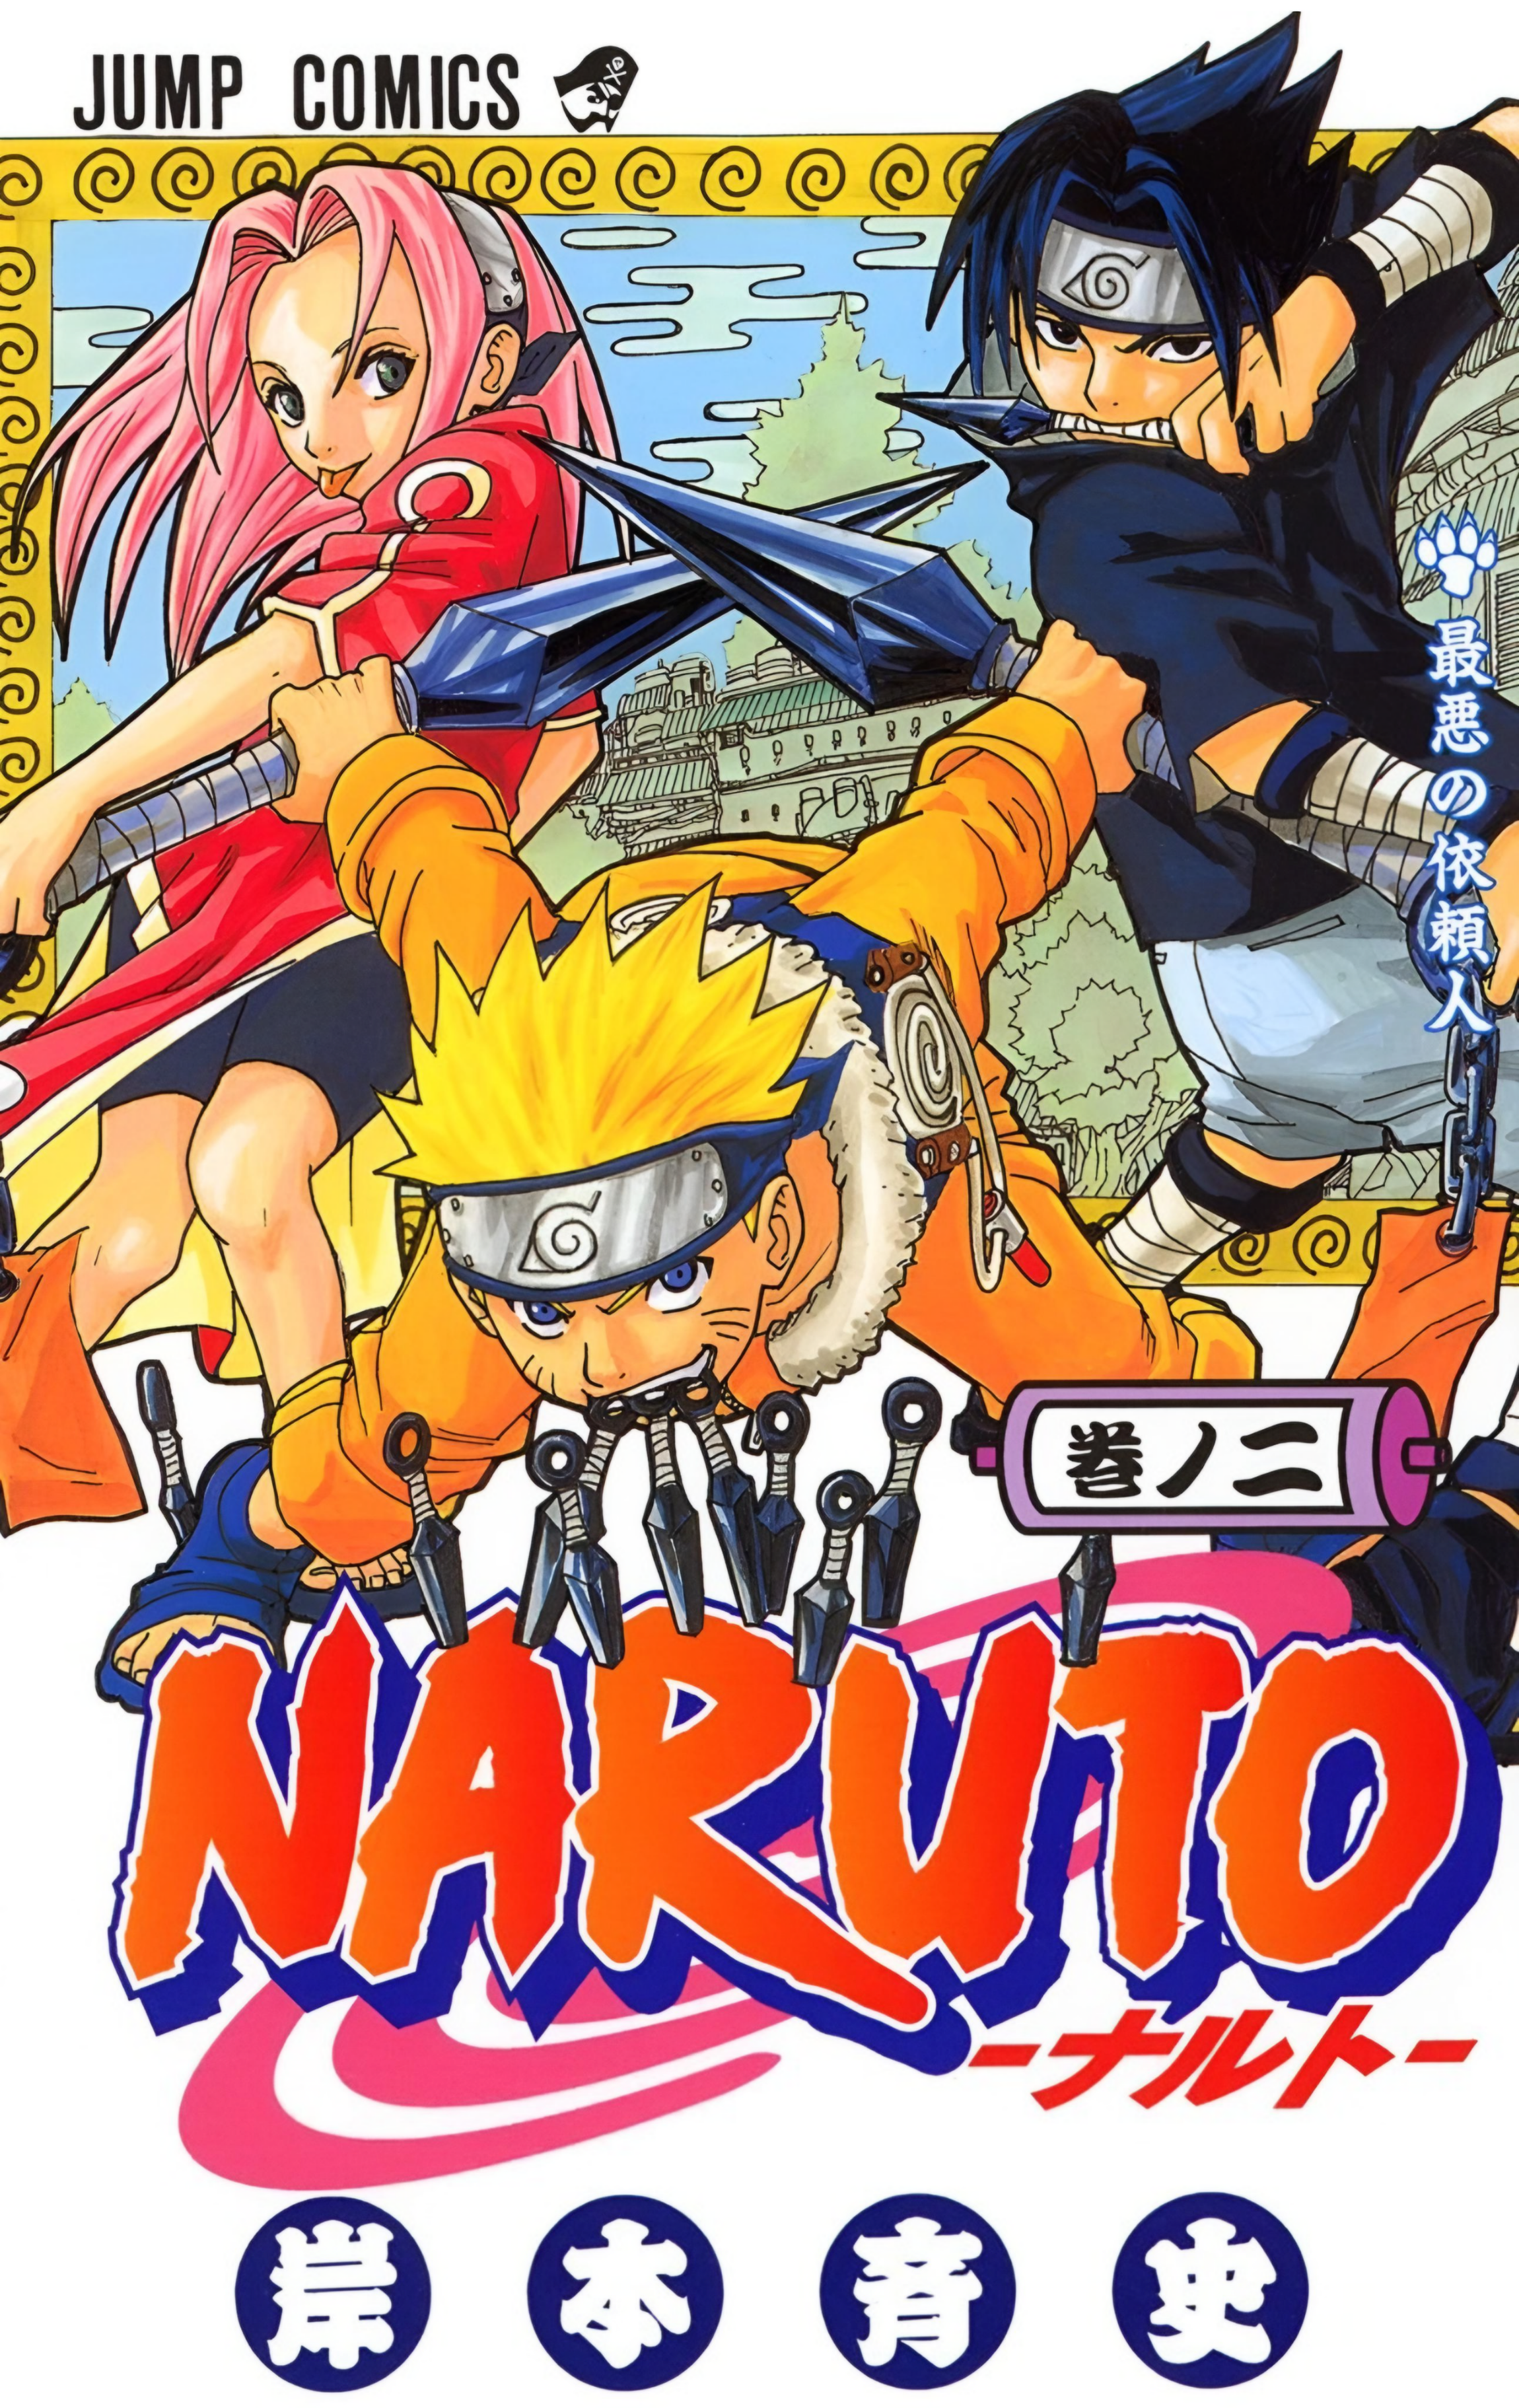 Naruto Gold Vol. 68 (Português) Capa comum